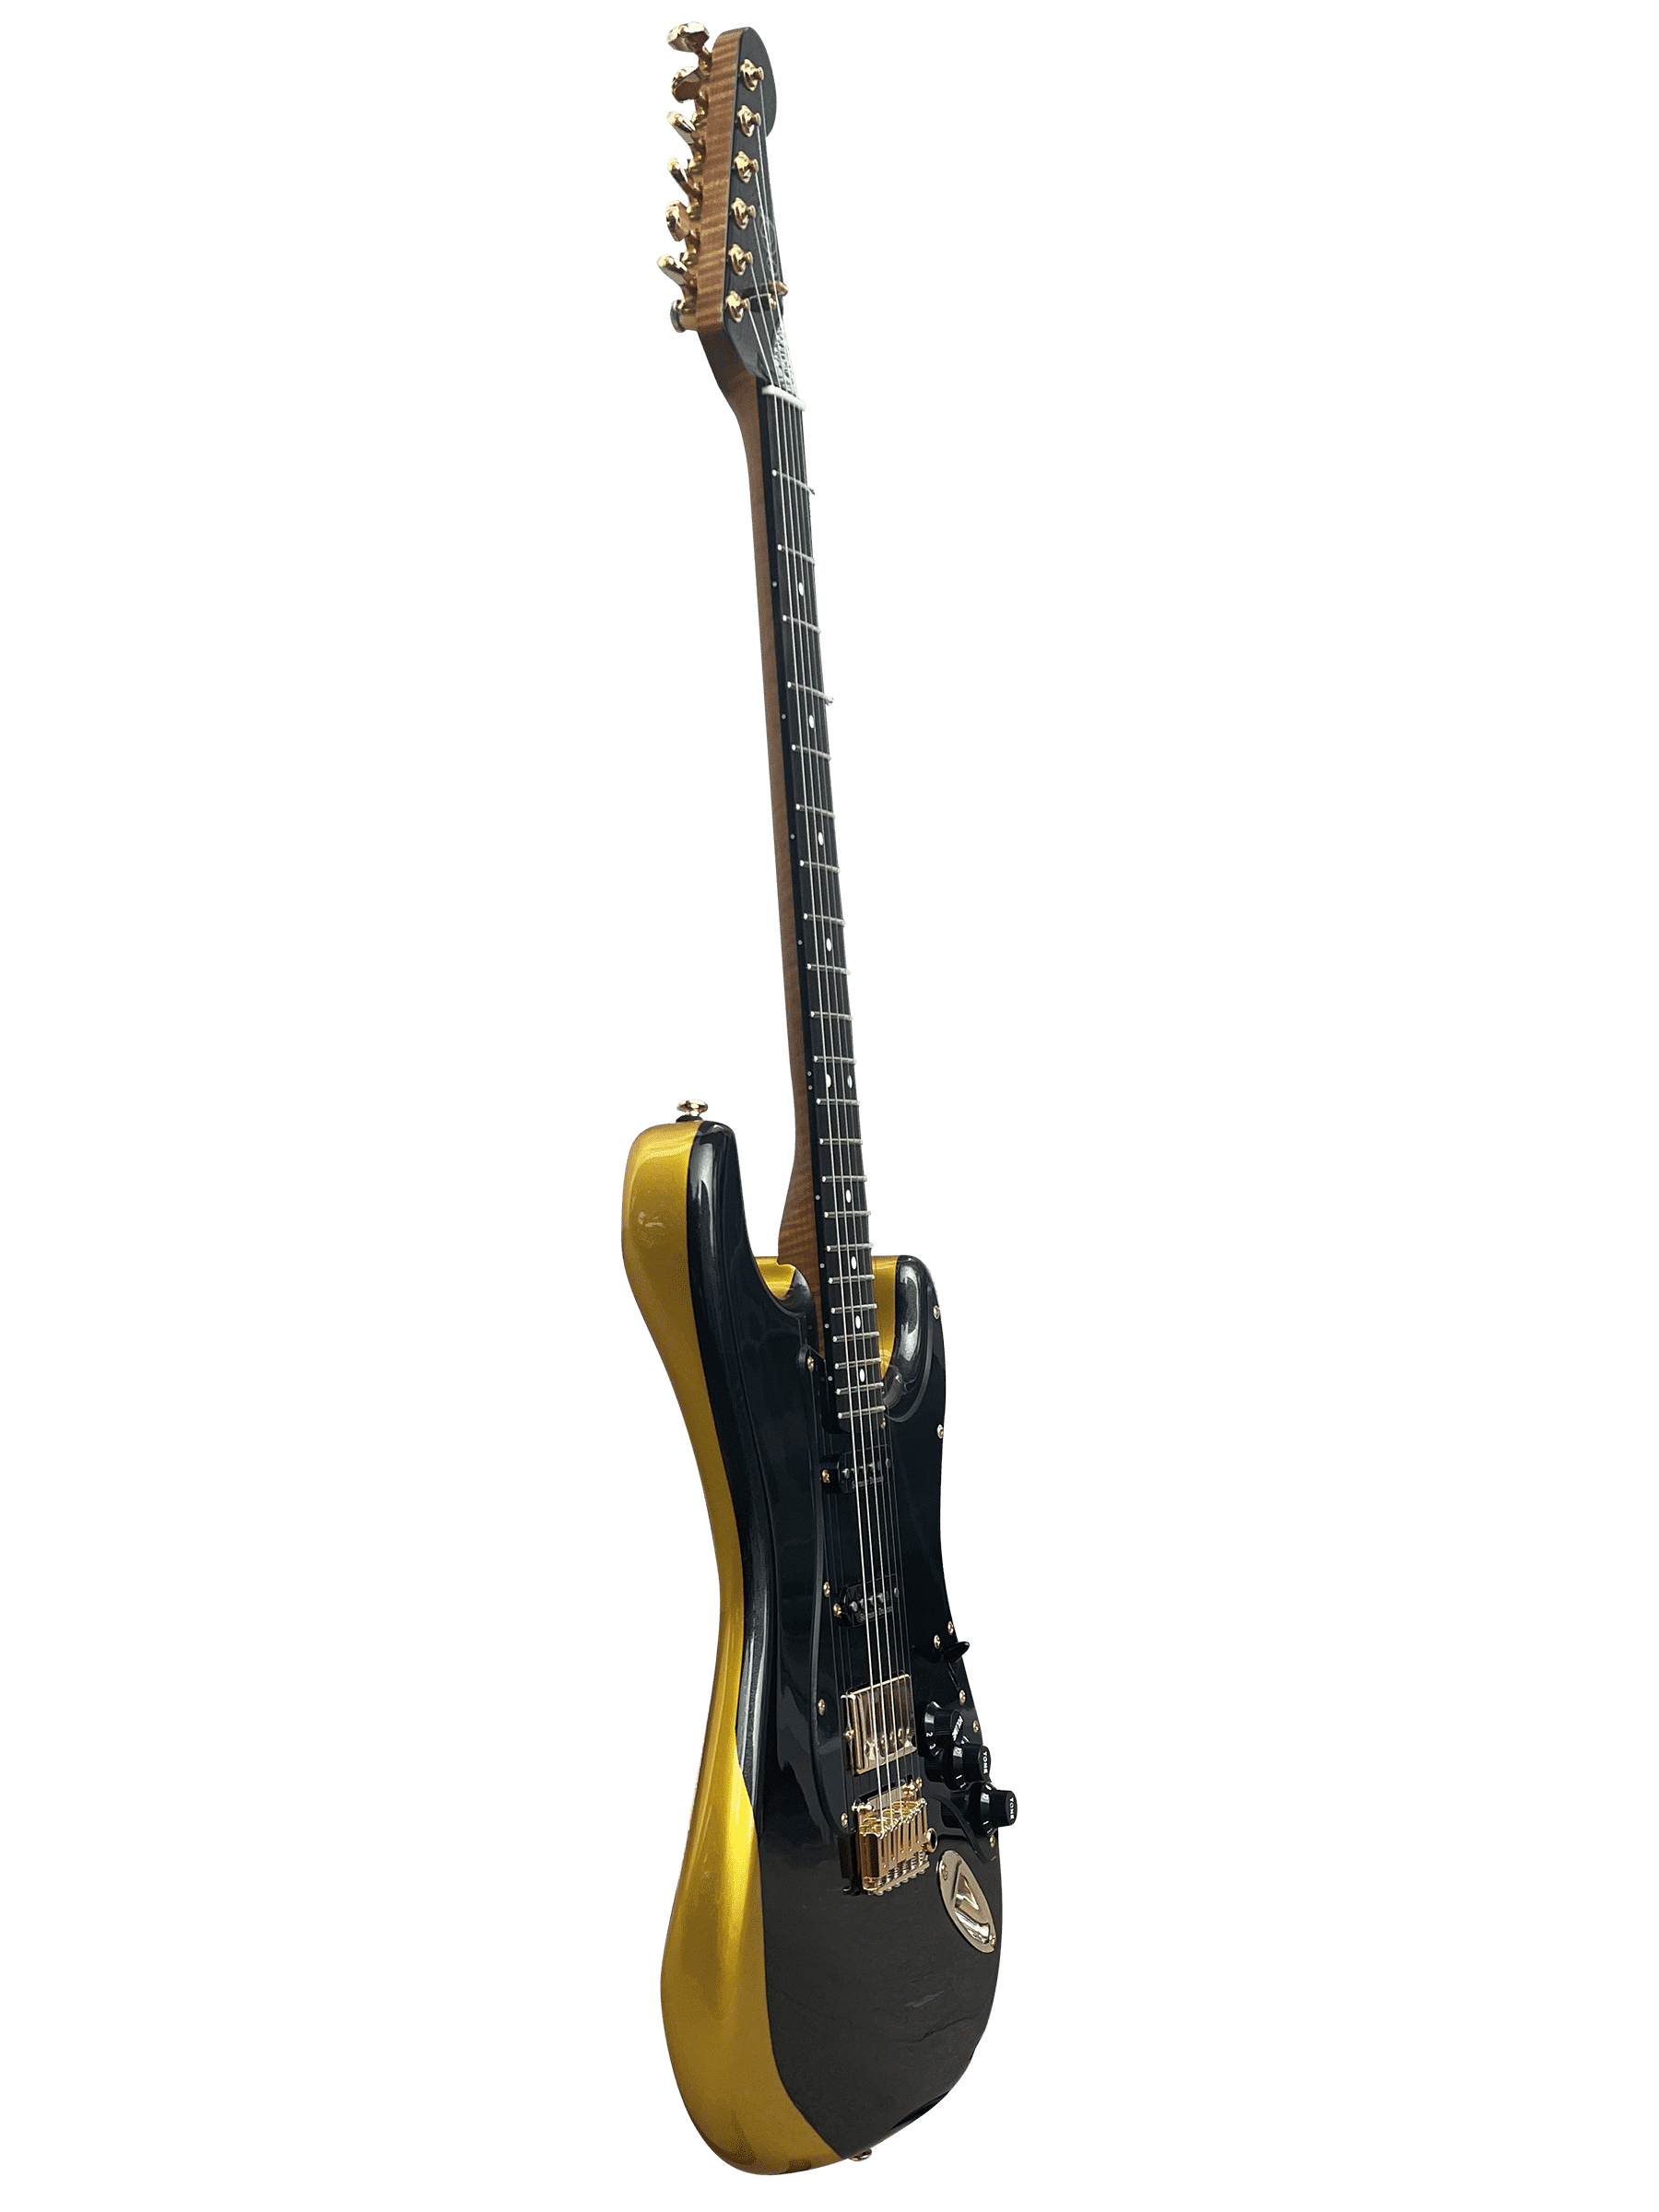 B-Magic CS Black & Gold Seymour Duncan Gotoh - 10S Guitars